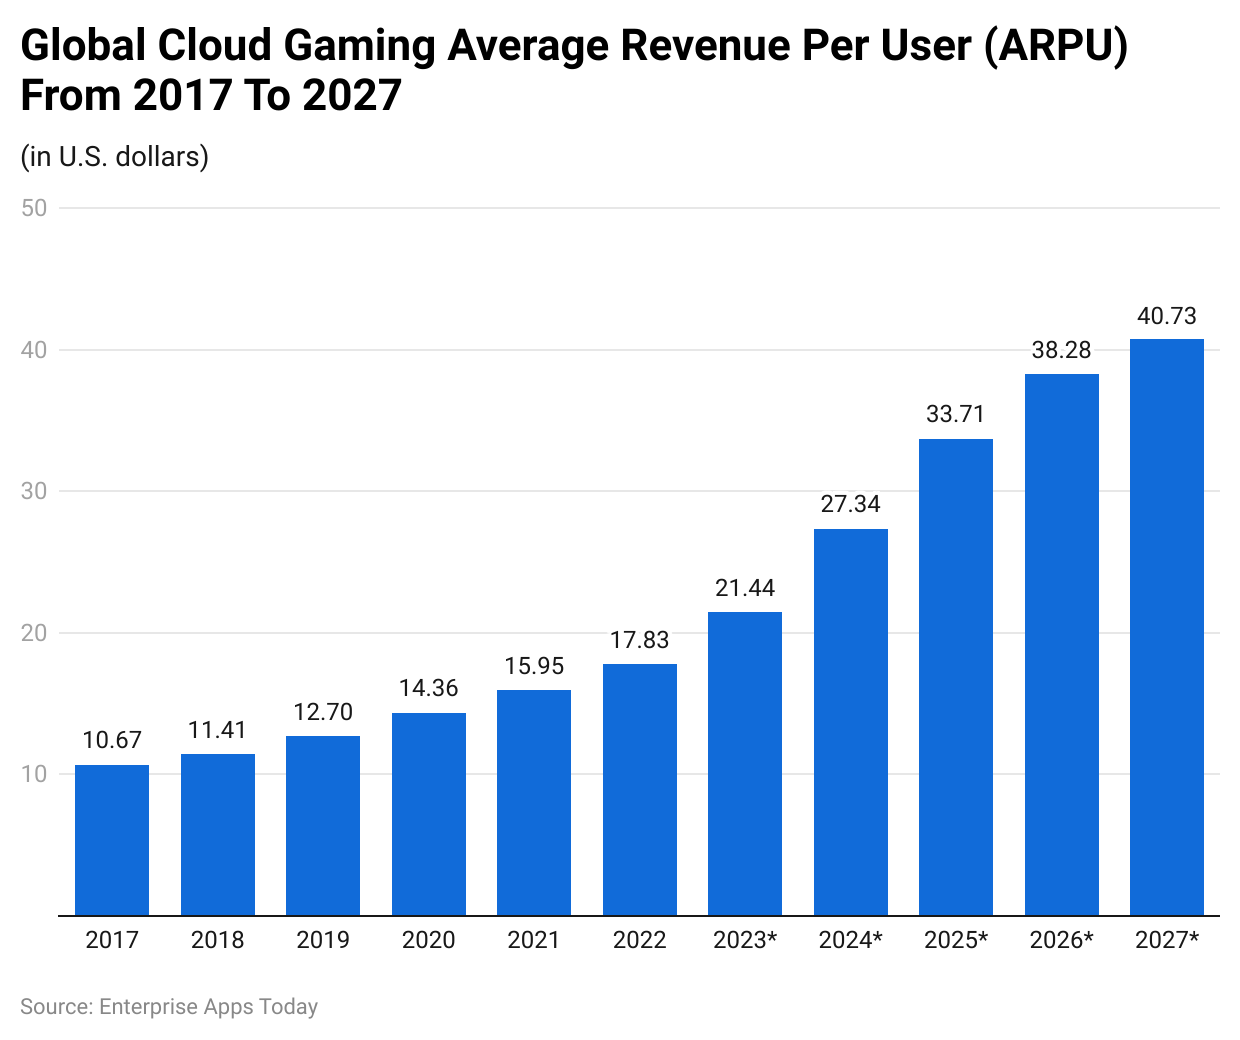 Global cloud gaming average revenue per user (ARPU) from 2017 to 2027